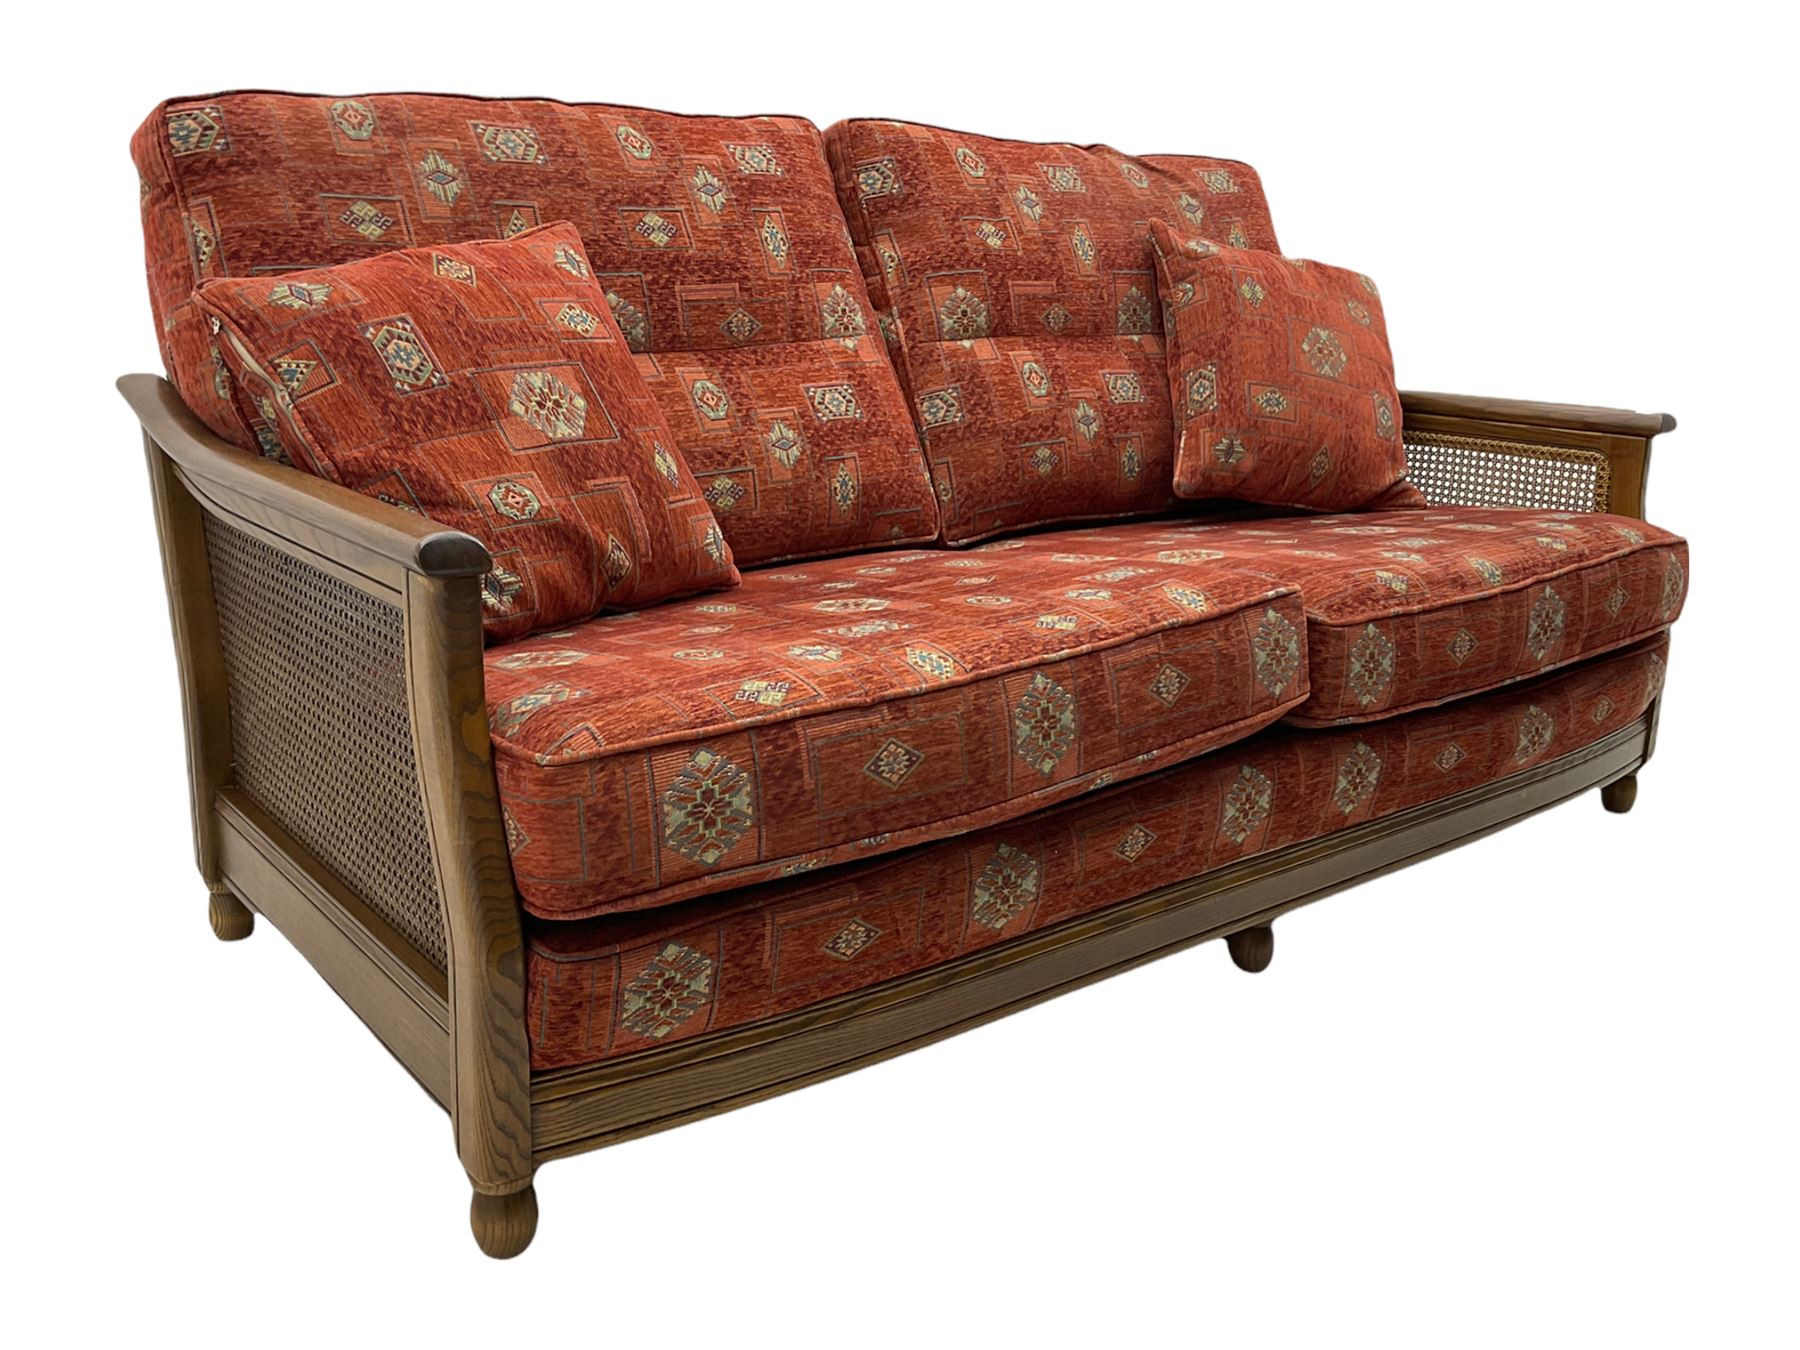 Ercol medium elm framed three seat bergere sofa - Image 6 of 14